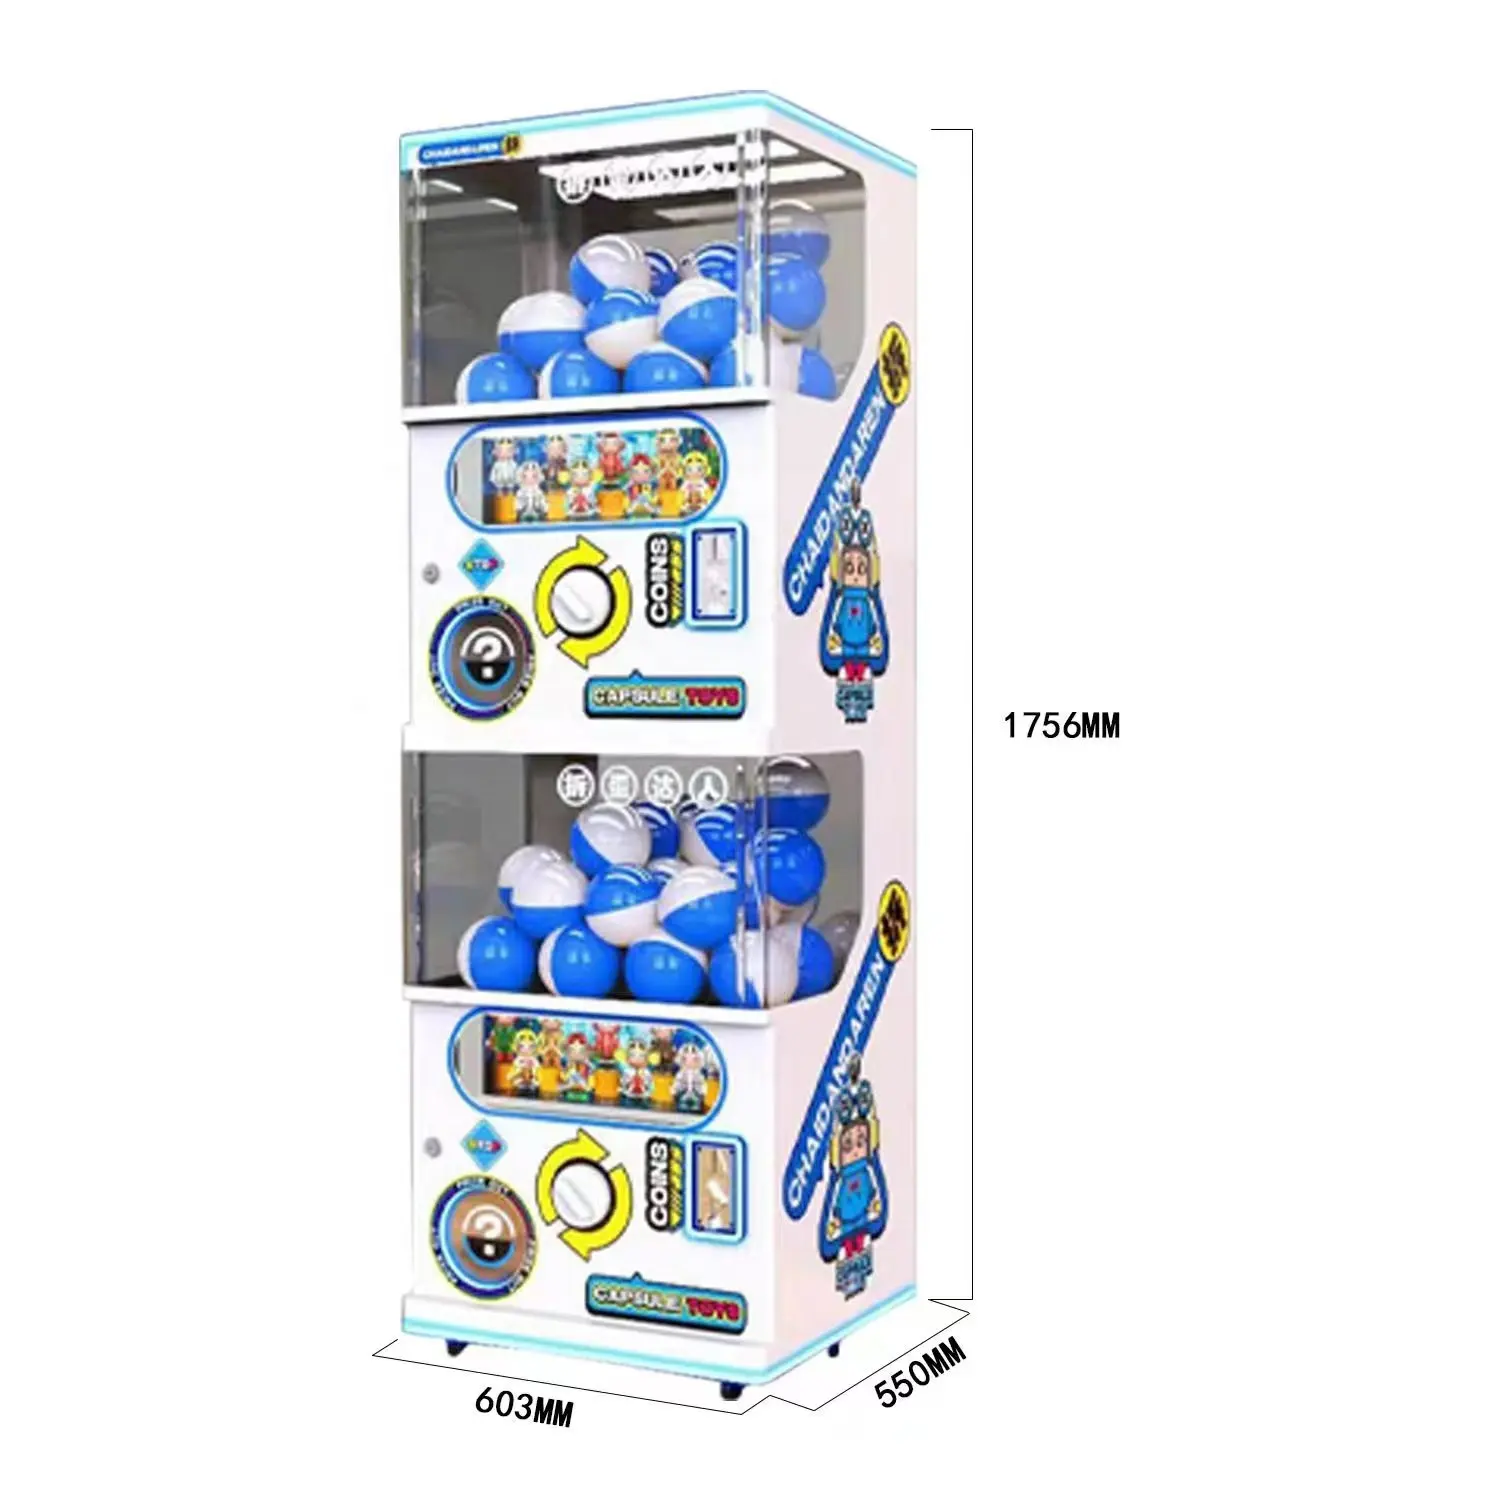 Mesin penjual Twisted telur mainan Gashapon mesin penjual otomatis mainan kapsul lucu